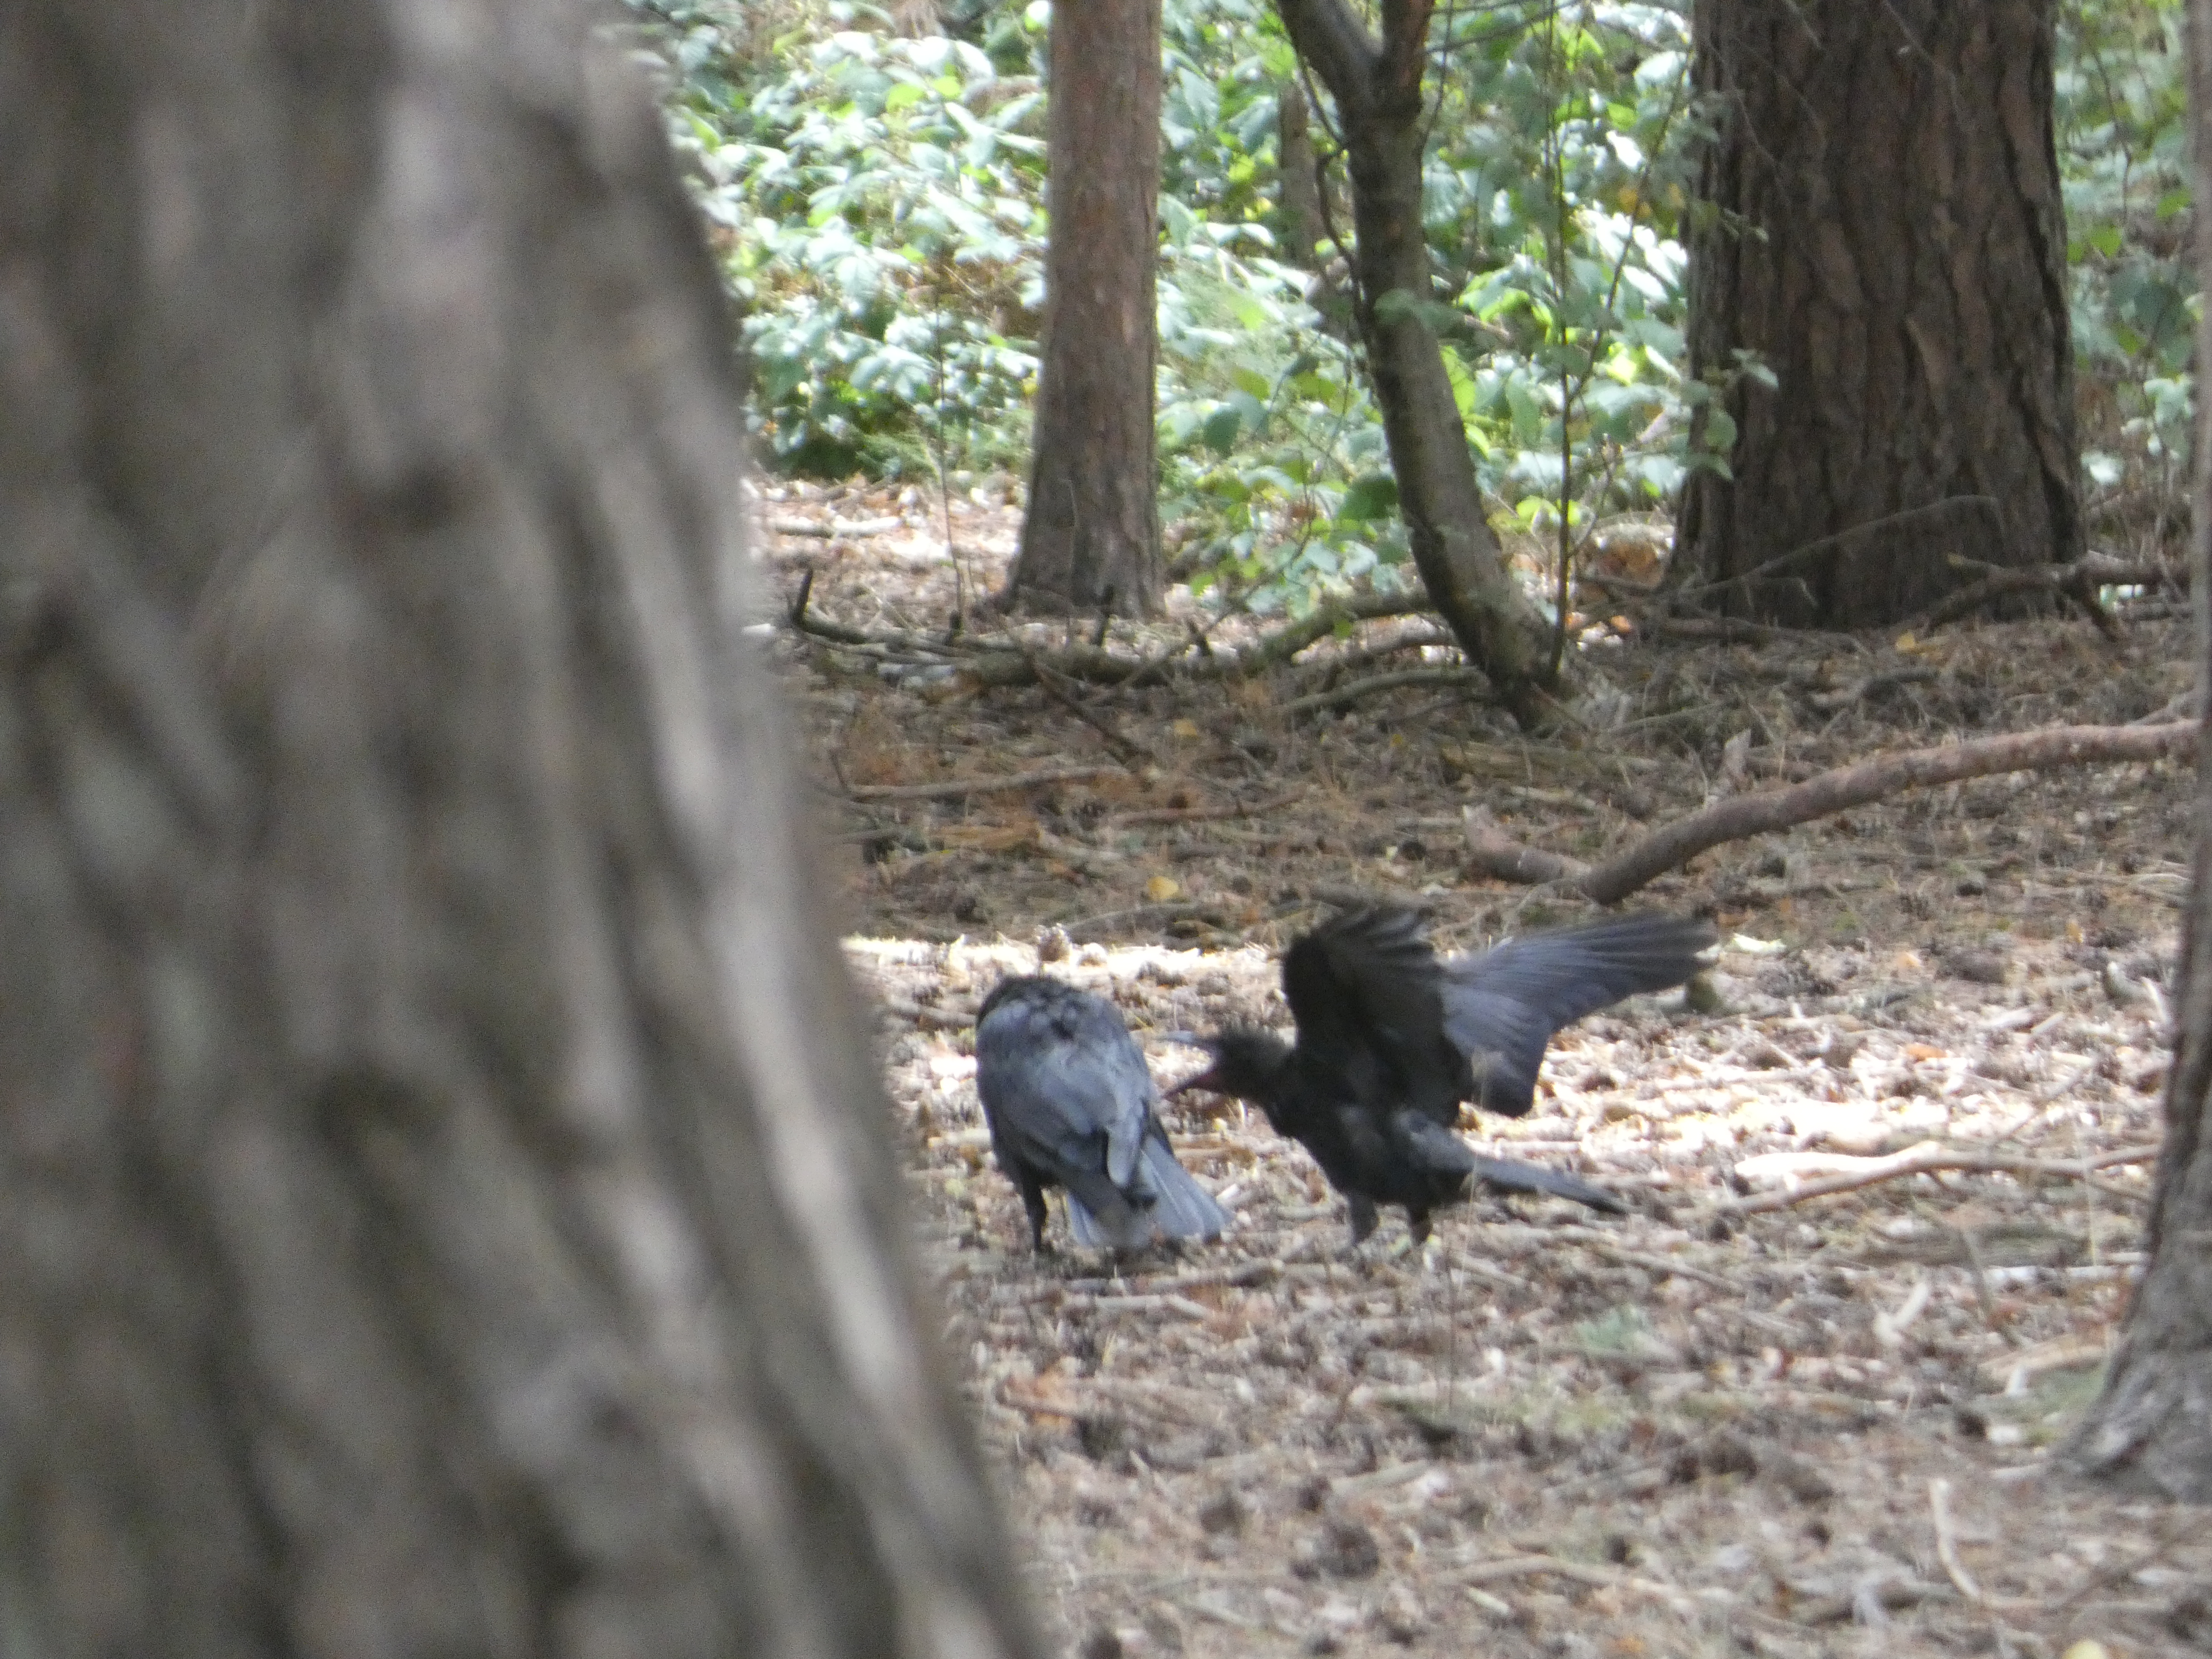 Crows arguing